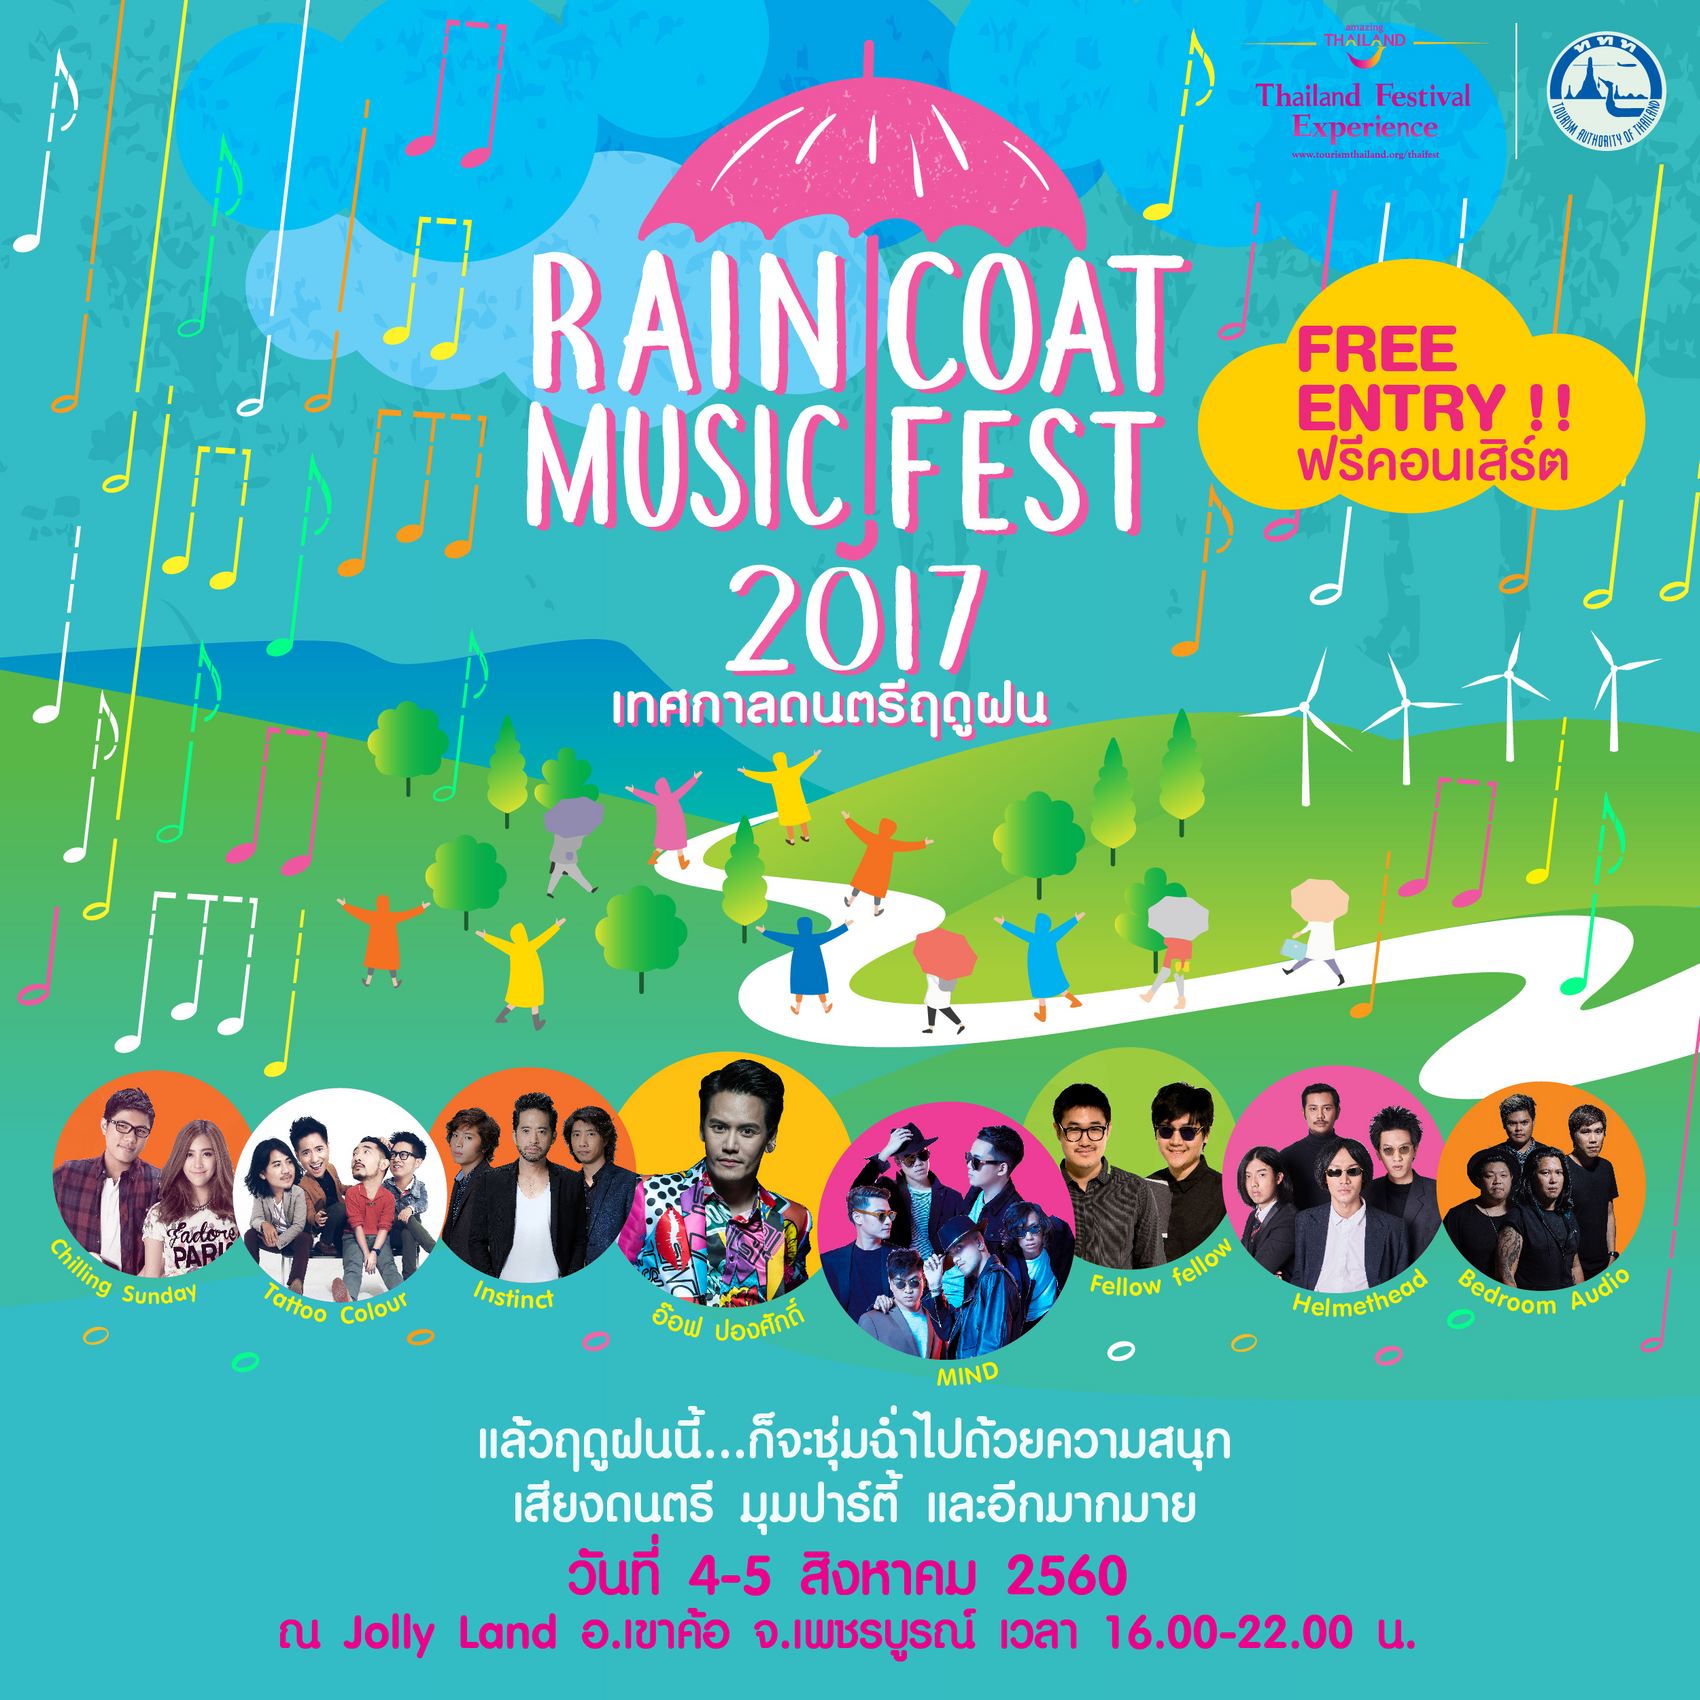 Raincoat Music Fest 2017 : เทศกาลดนตรีฤดูฝน